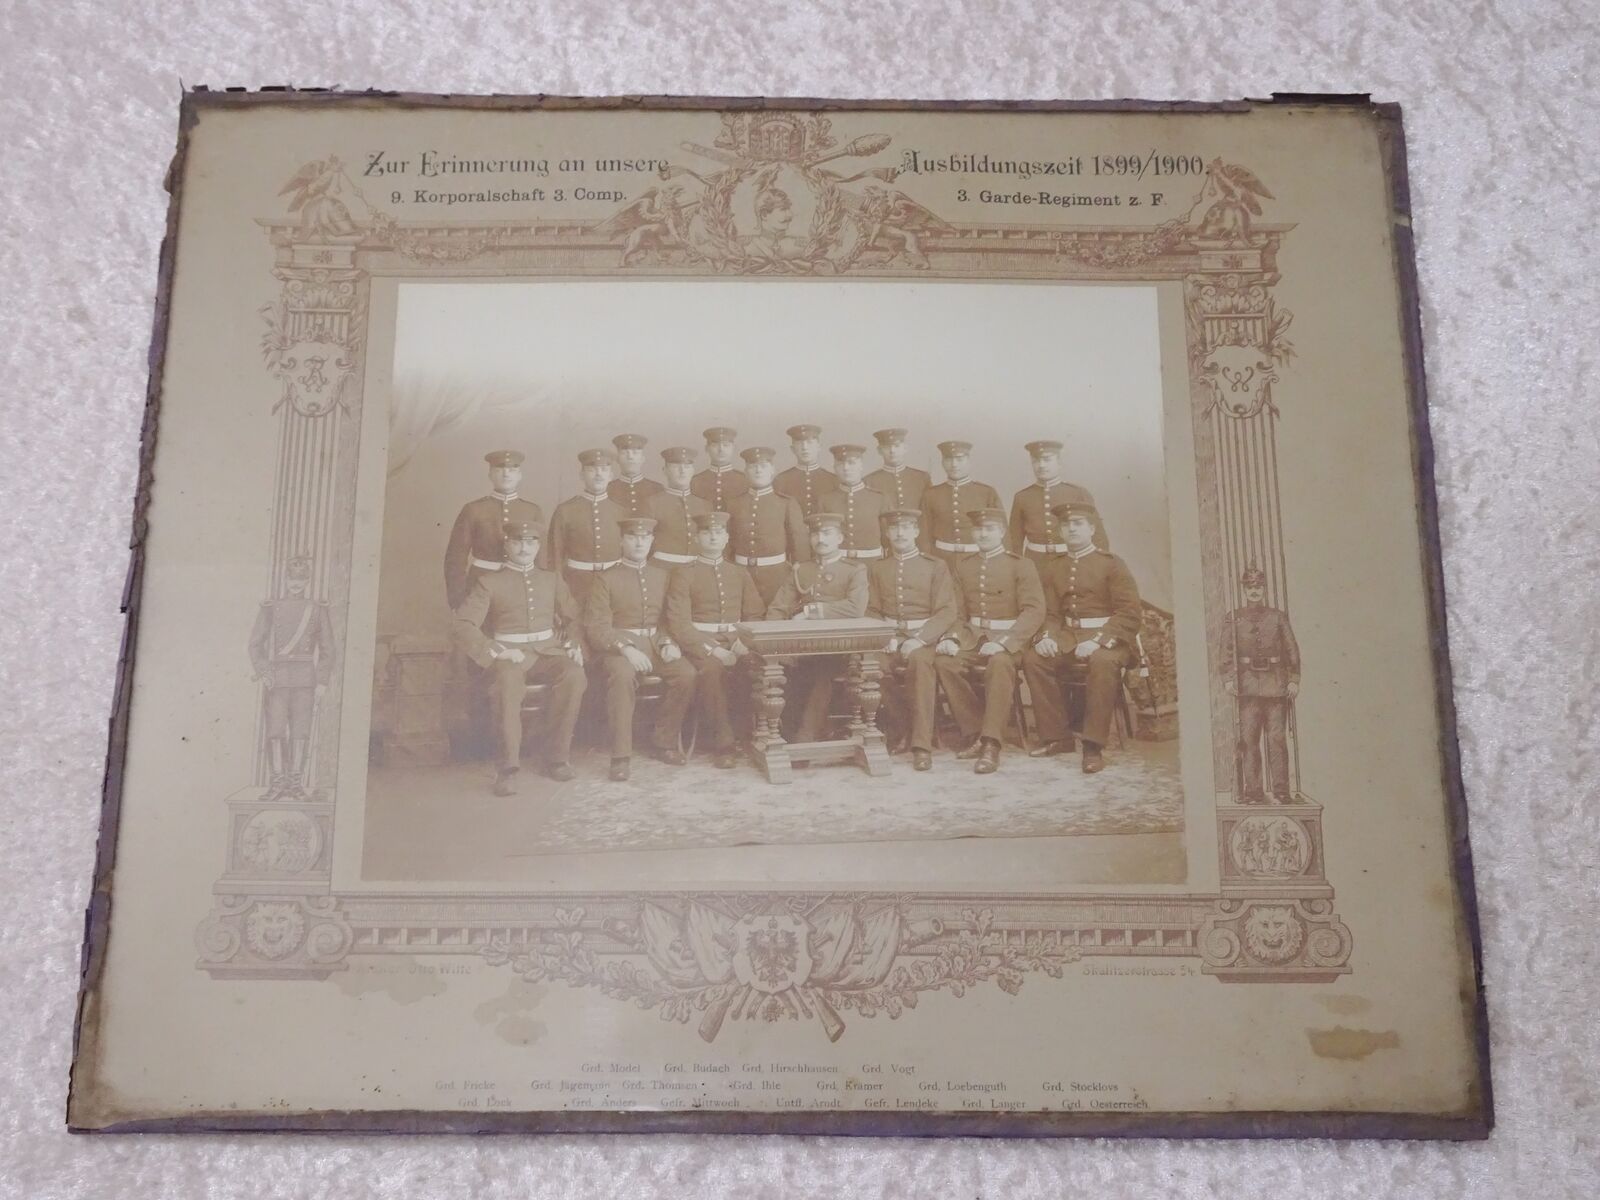 Antique Soldiers Reserve Image Photo 3. Garde-Regiment Z. for vintage